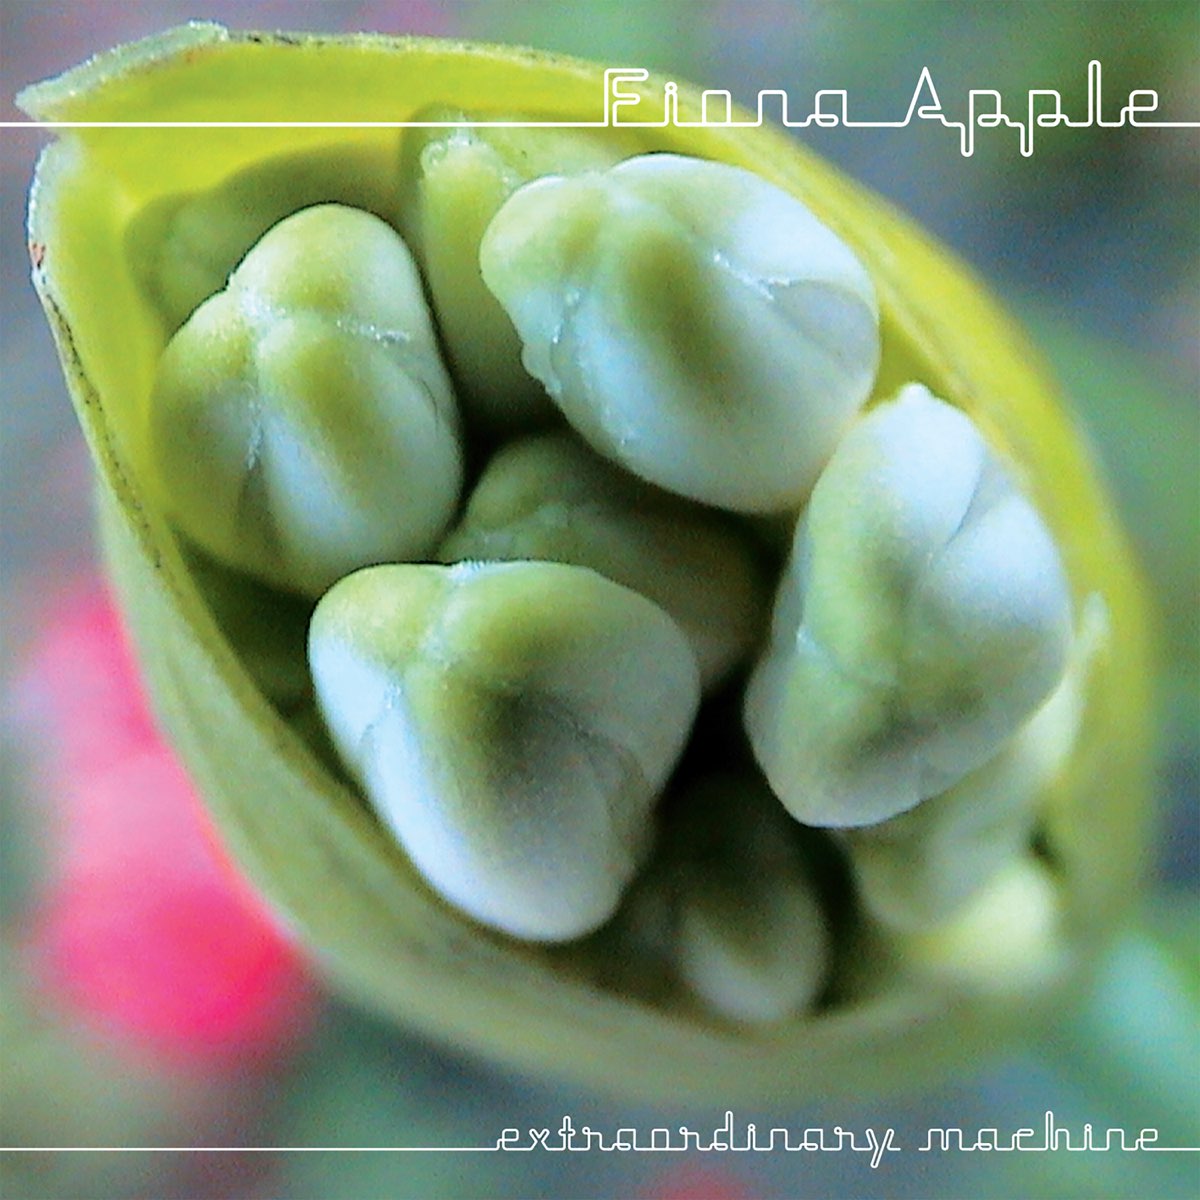 Extraordinary Machine - Album by Fiona Apple - Apple Music